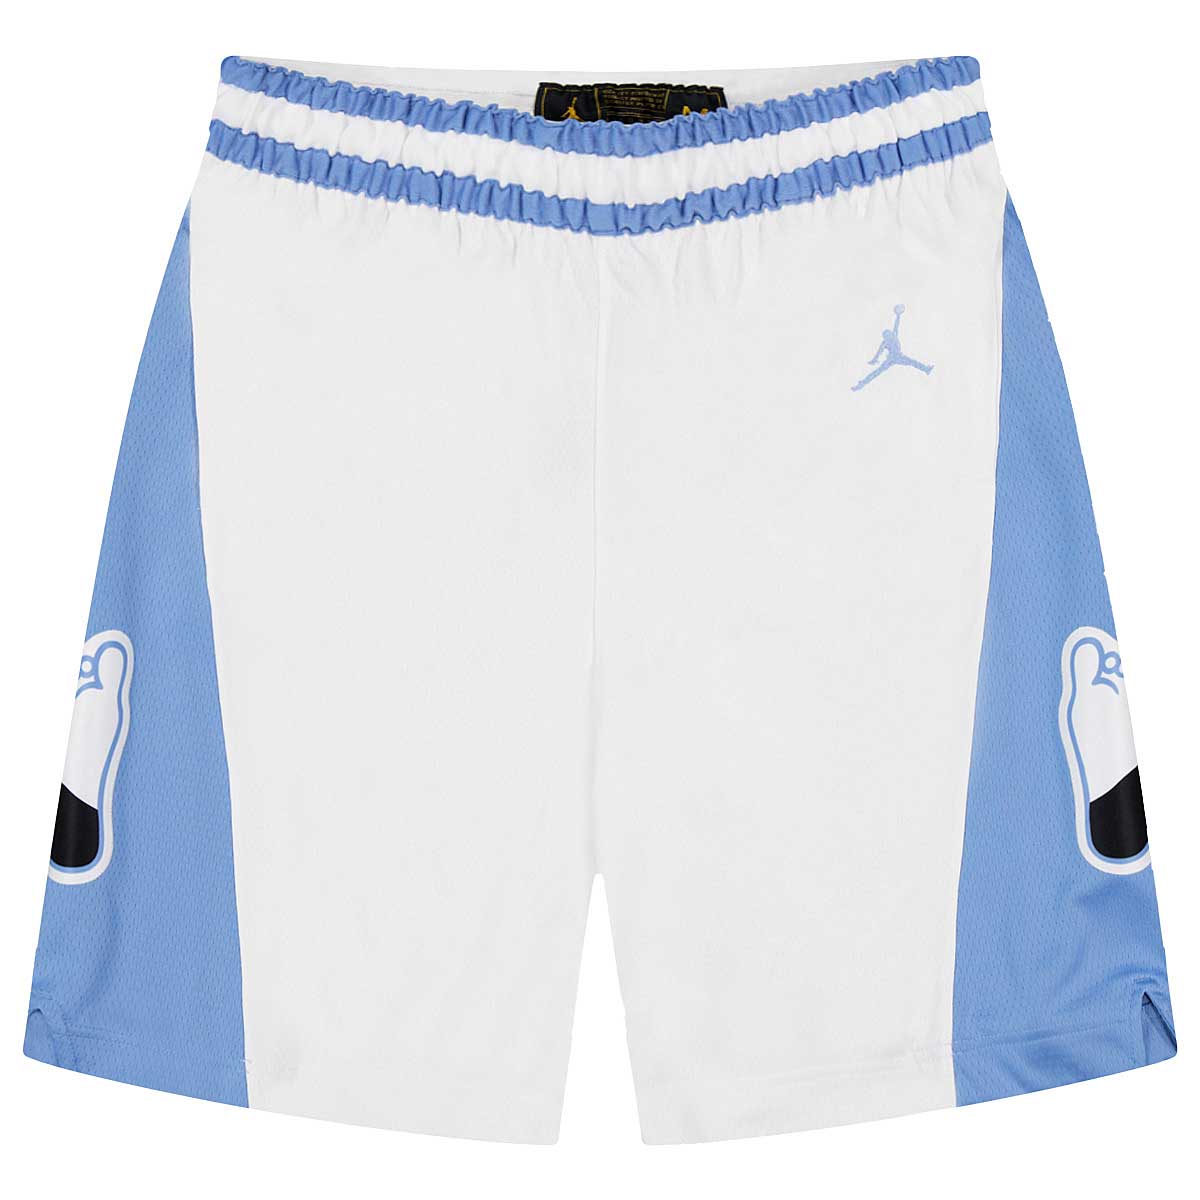 Jordan Ncaa North Carolina Tarheels Retro Limited Edition Shorts, Weiß/valor Blau/valor Blau S